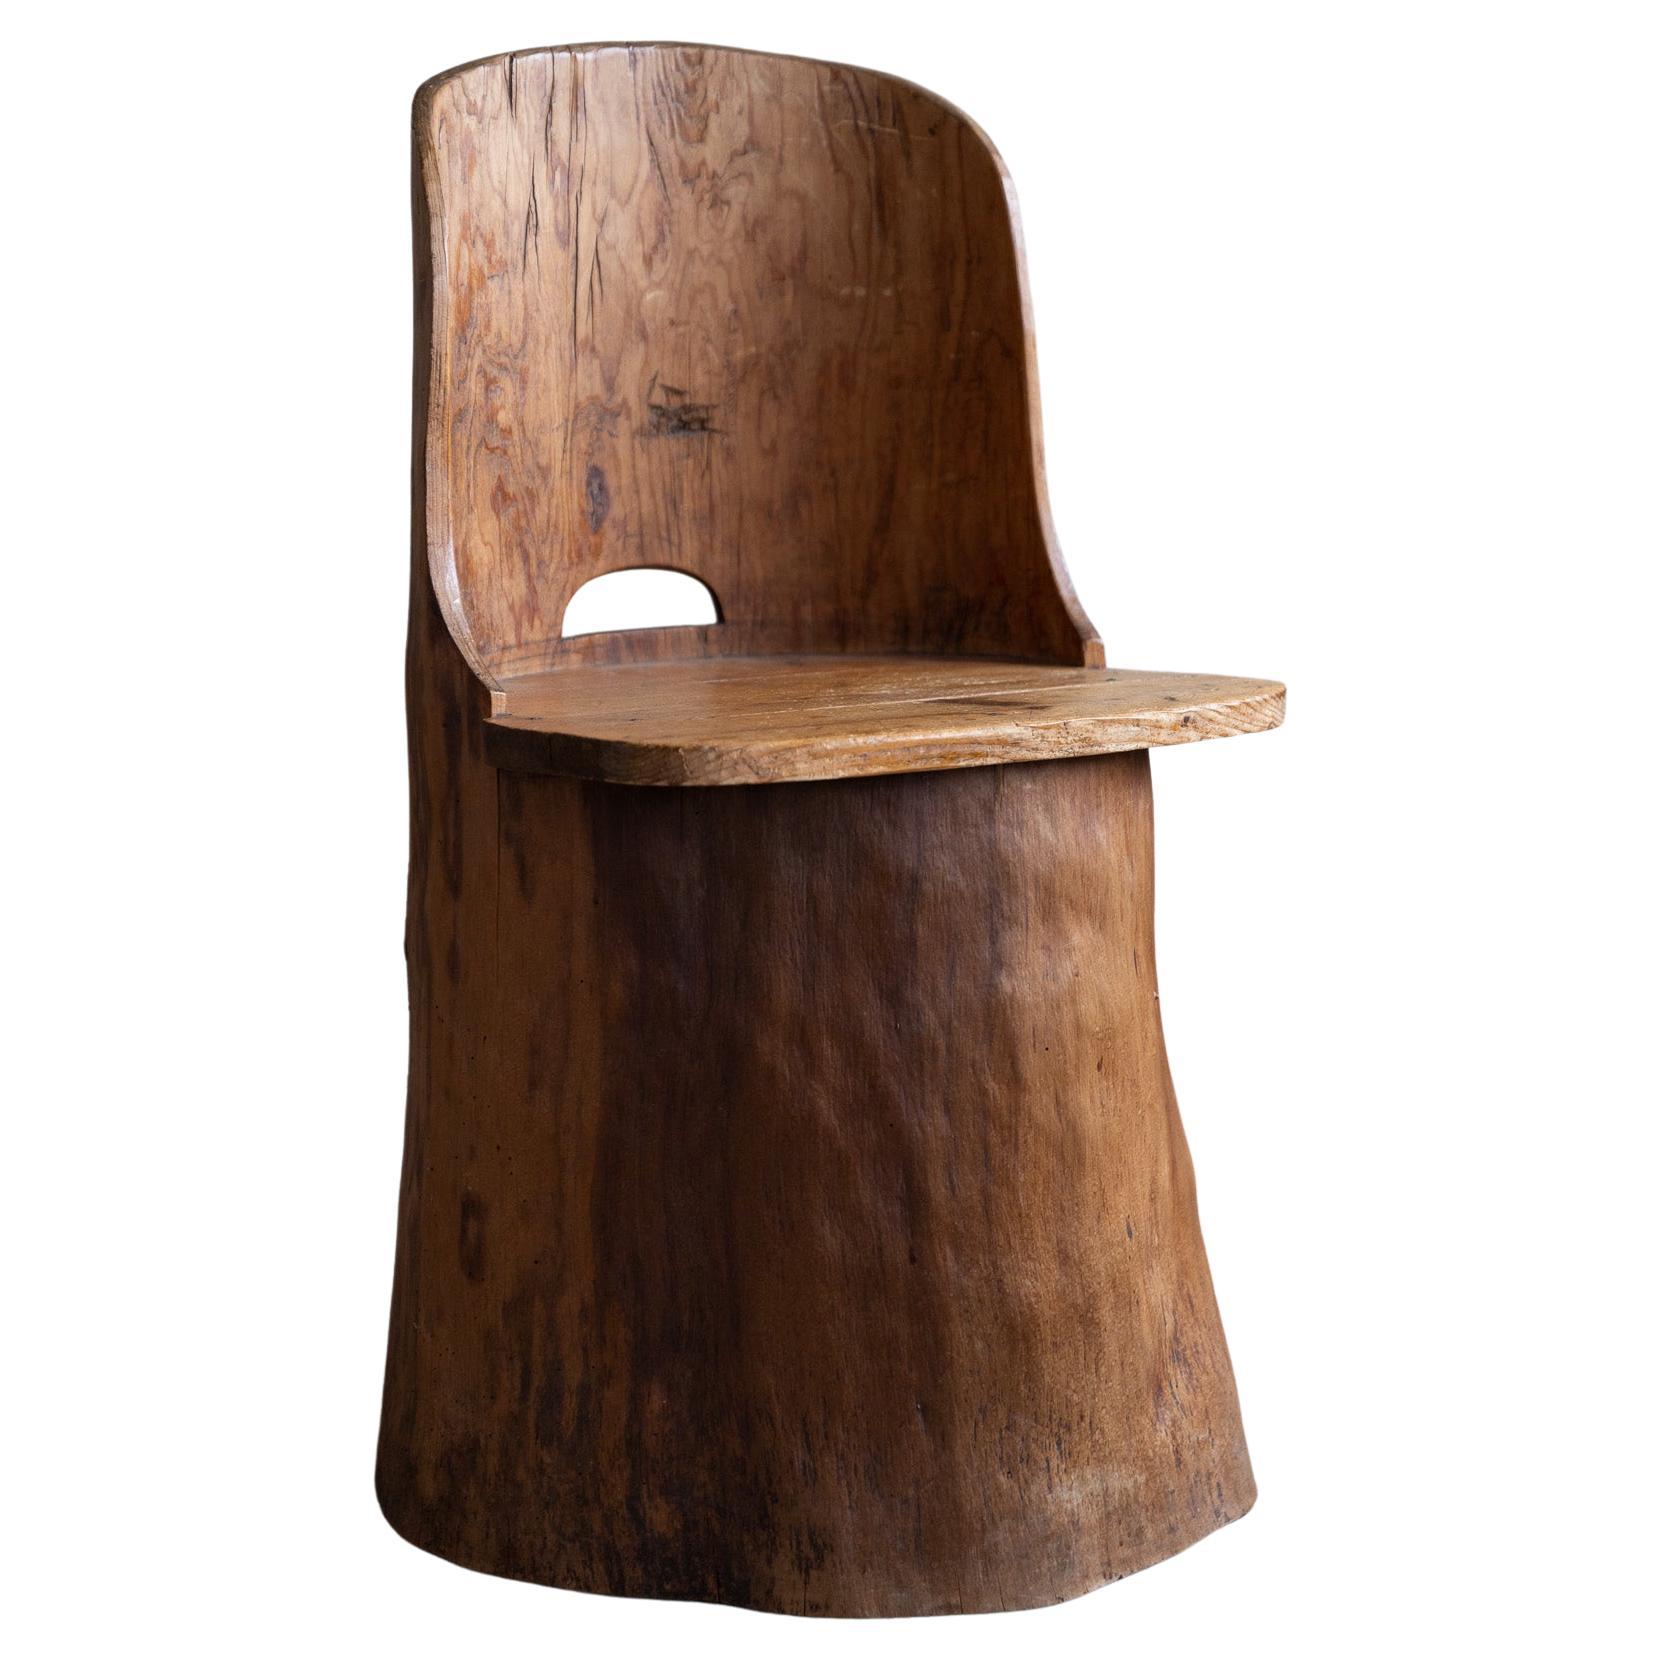 Hand Carved Primitive Stump Chair in Pine, Swedish Modern, Wabi Sabi, 1960s